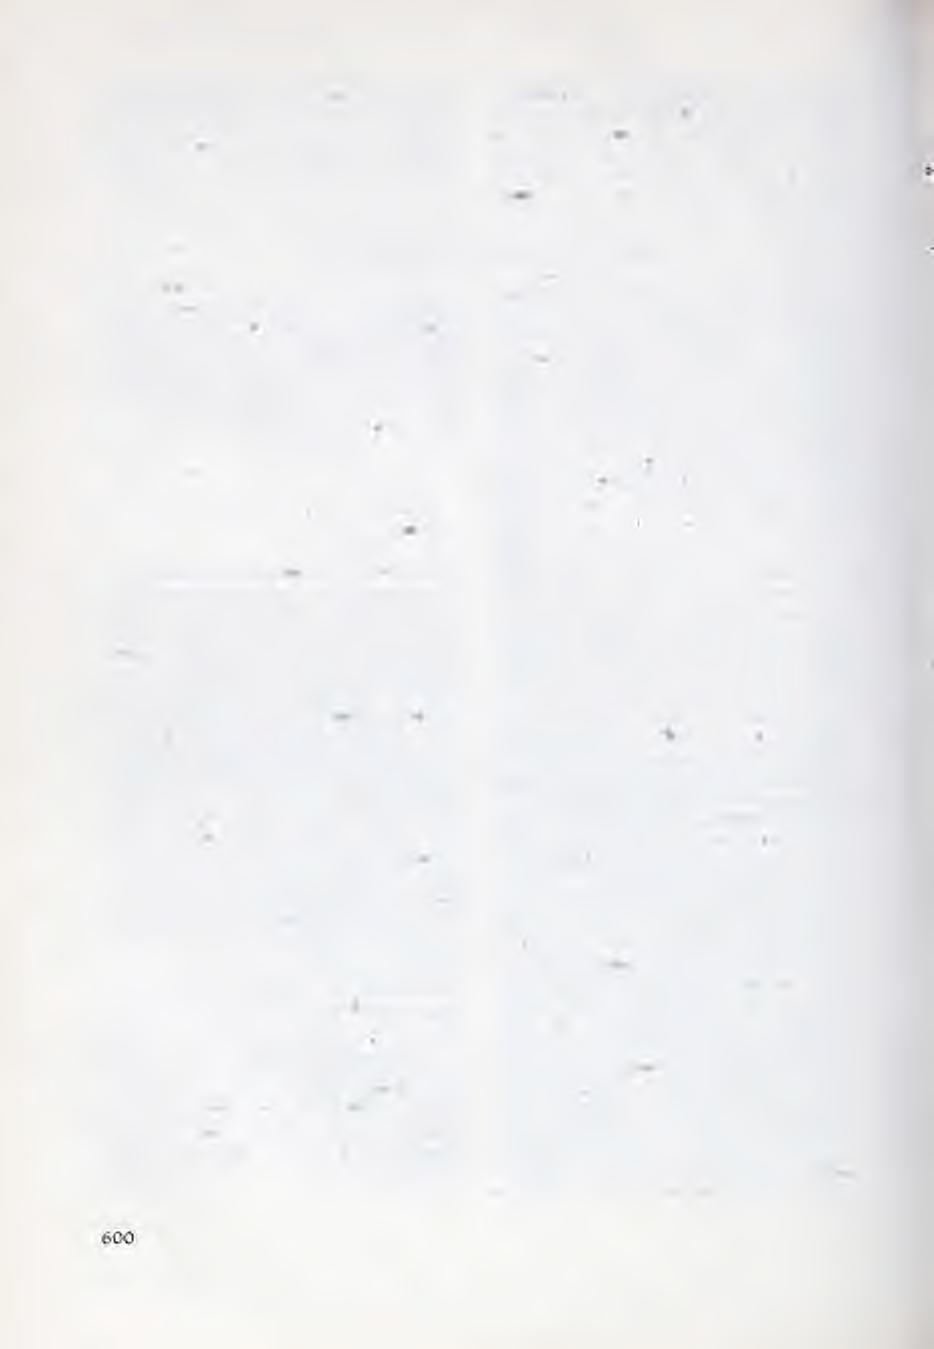 REHABILITACIJA (Rehabilitation), Therapeutic. Notes, 3:660, 1959.